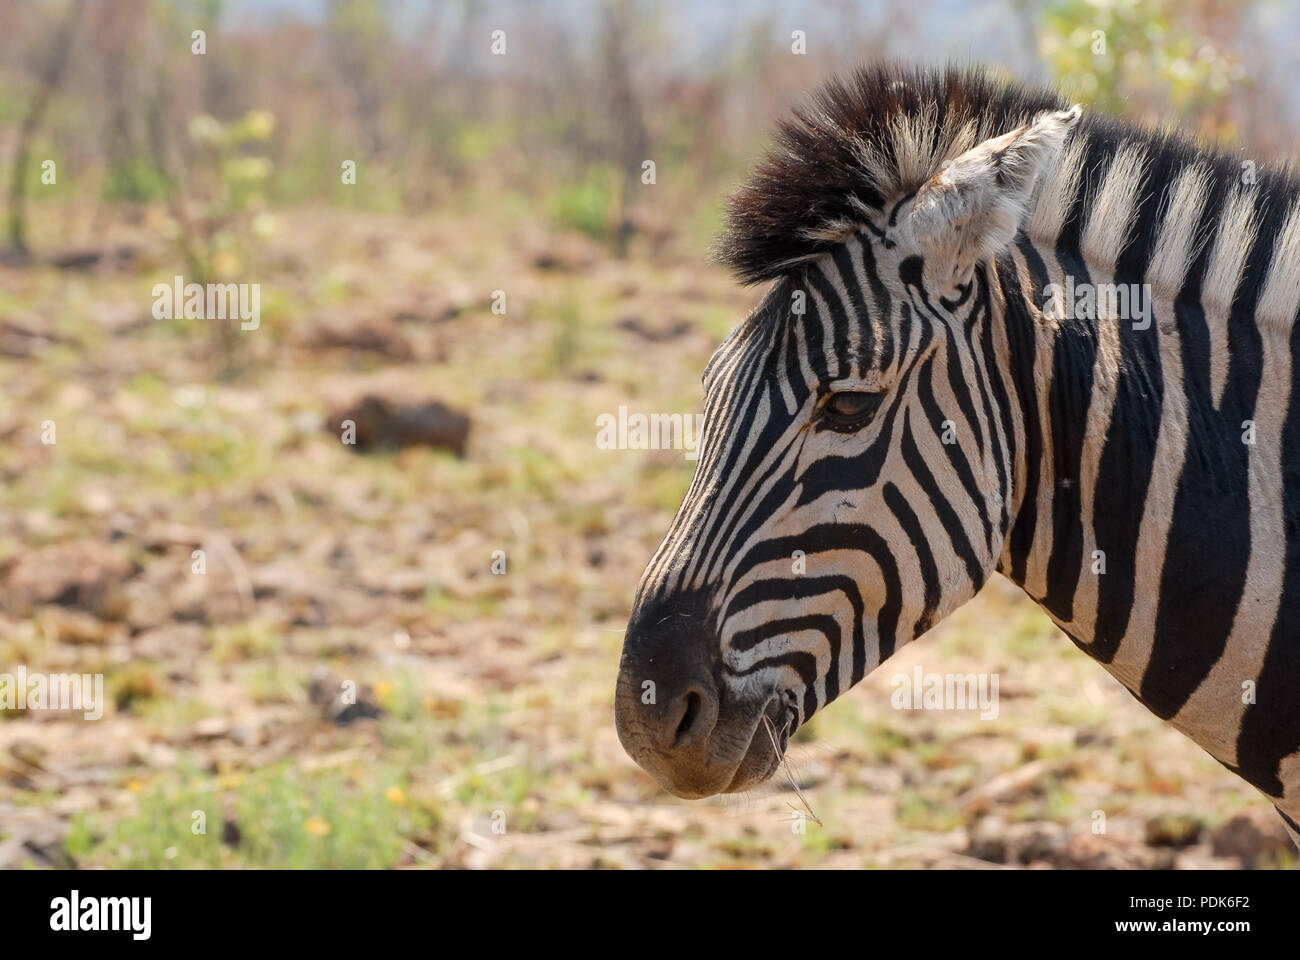 Zebra portrait head with grass culm in mouth Stock Photo